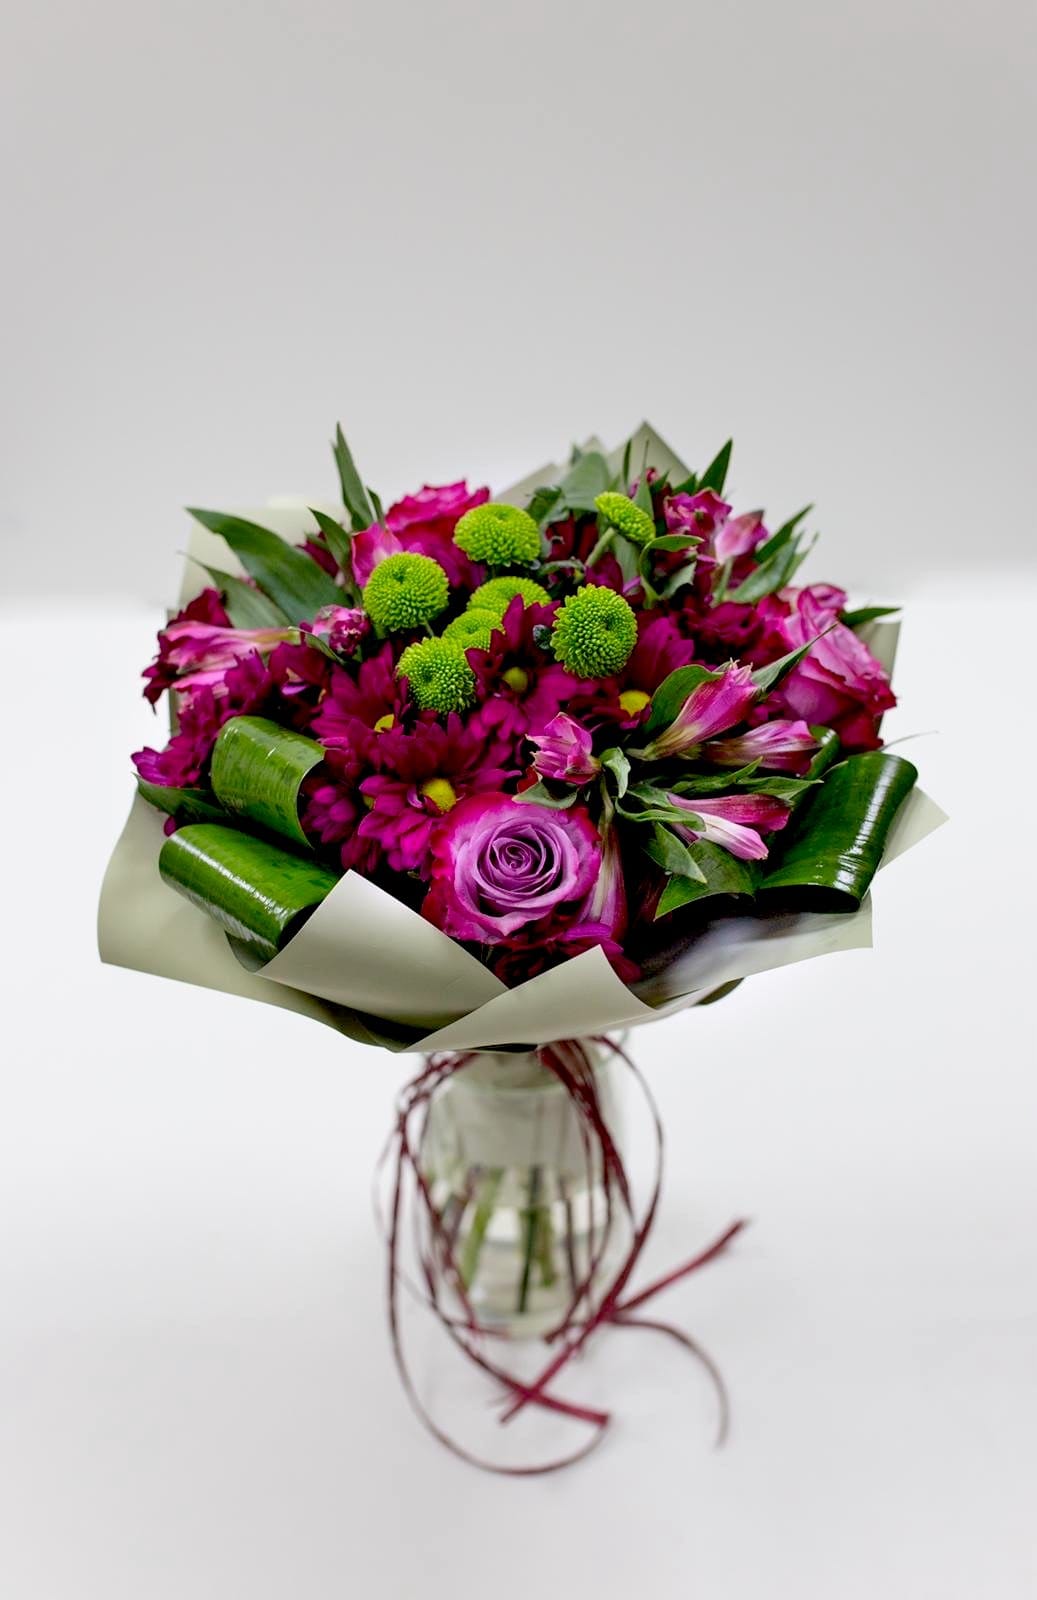 Spring Purple Passion - Flower Bouquet - Strelitzia's Floristry & Irish Craft Shop